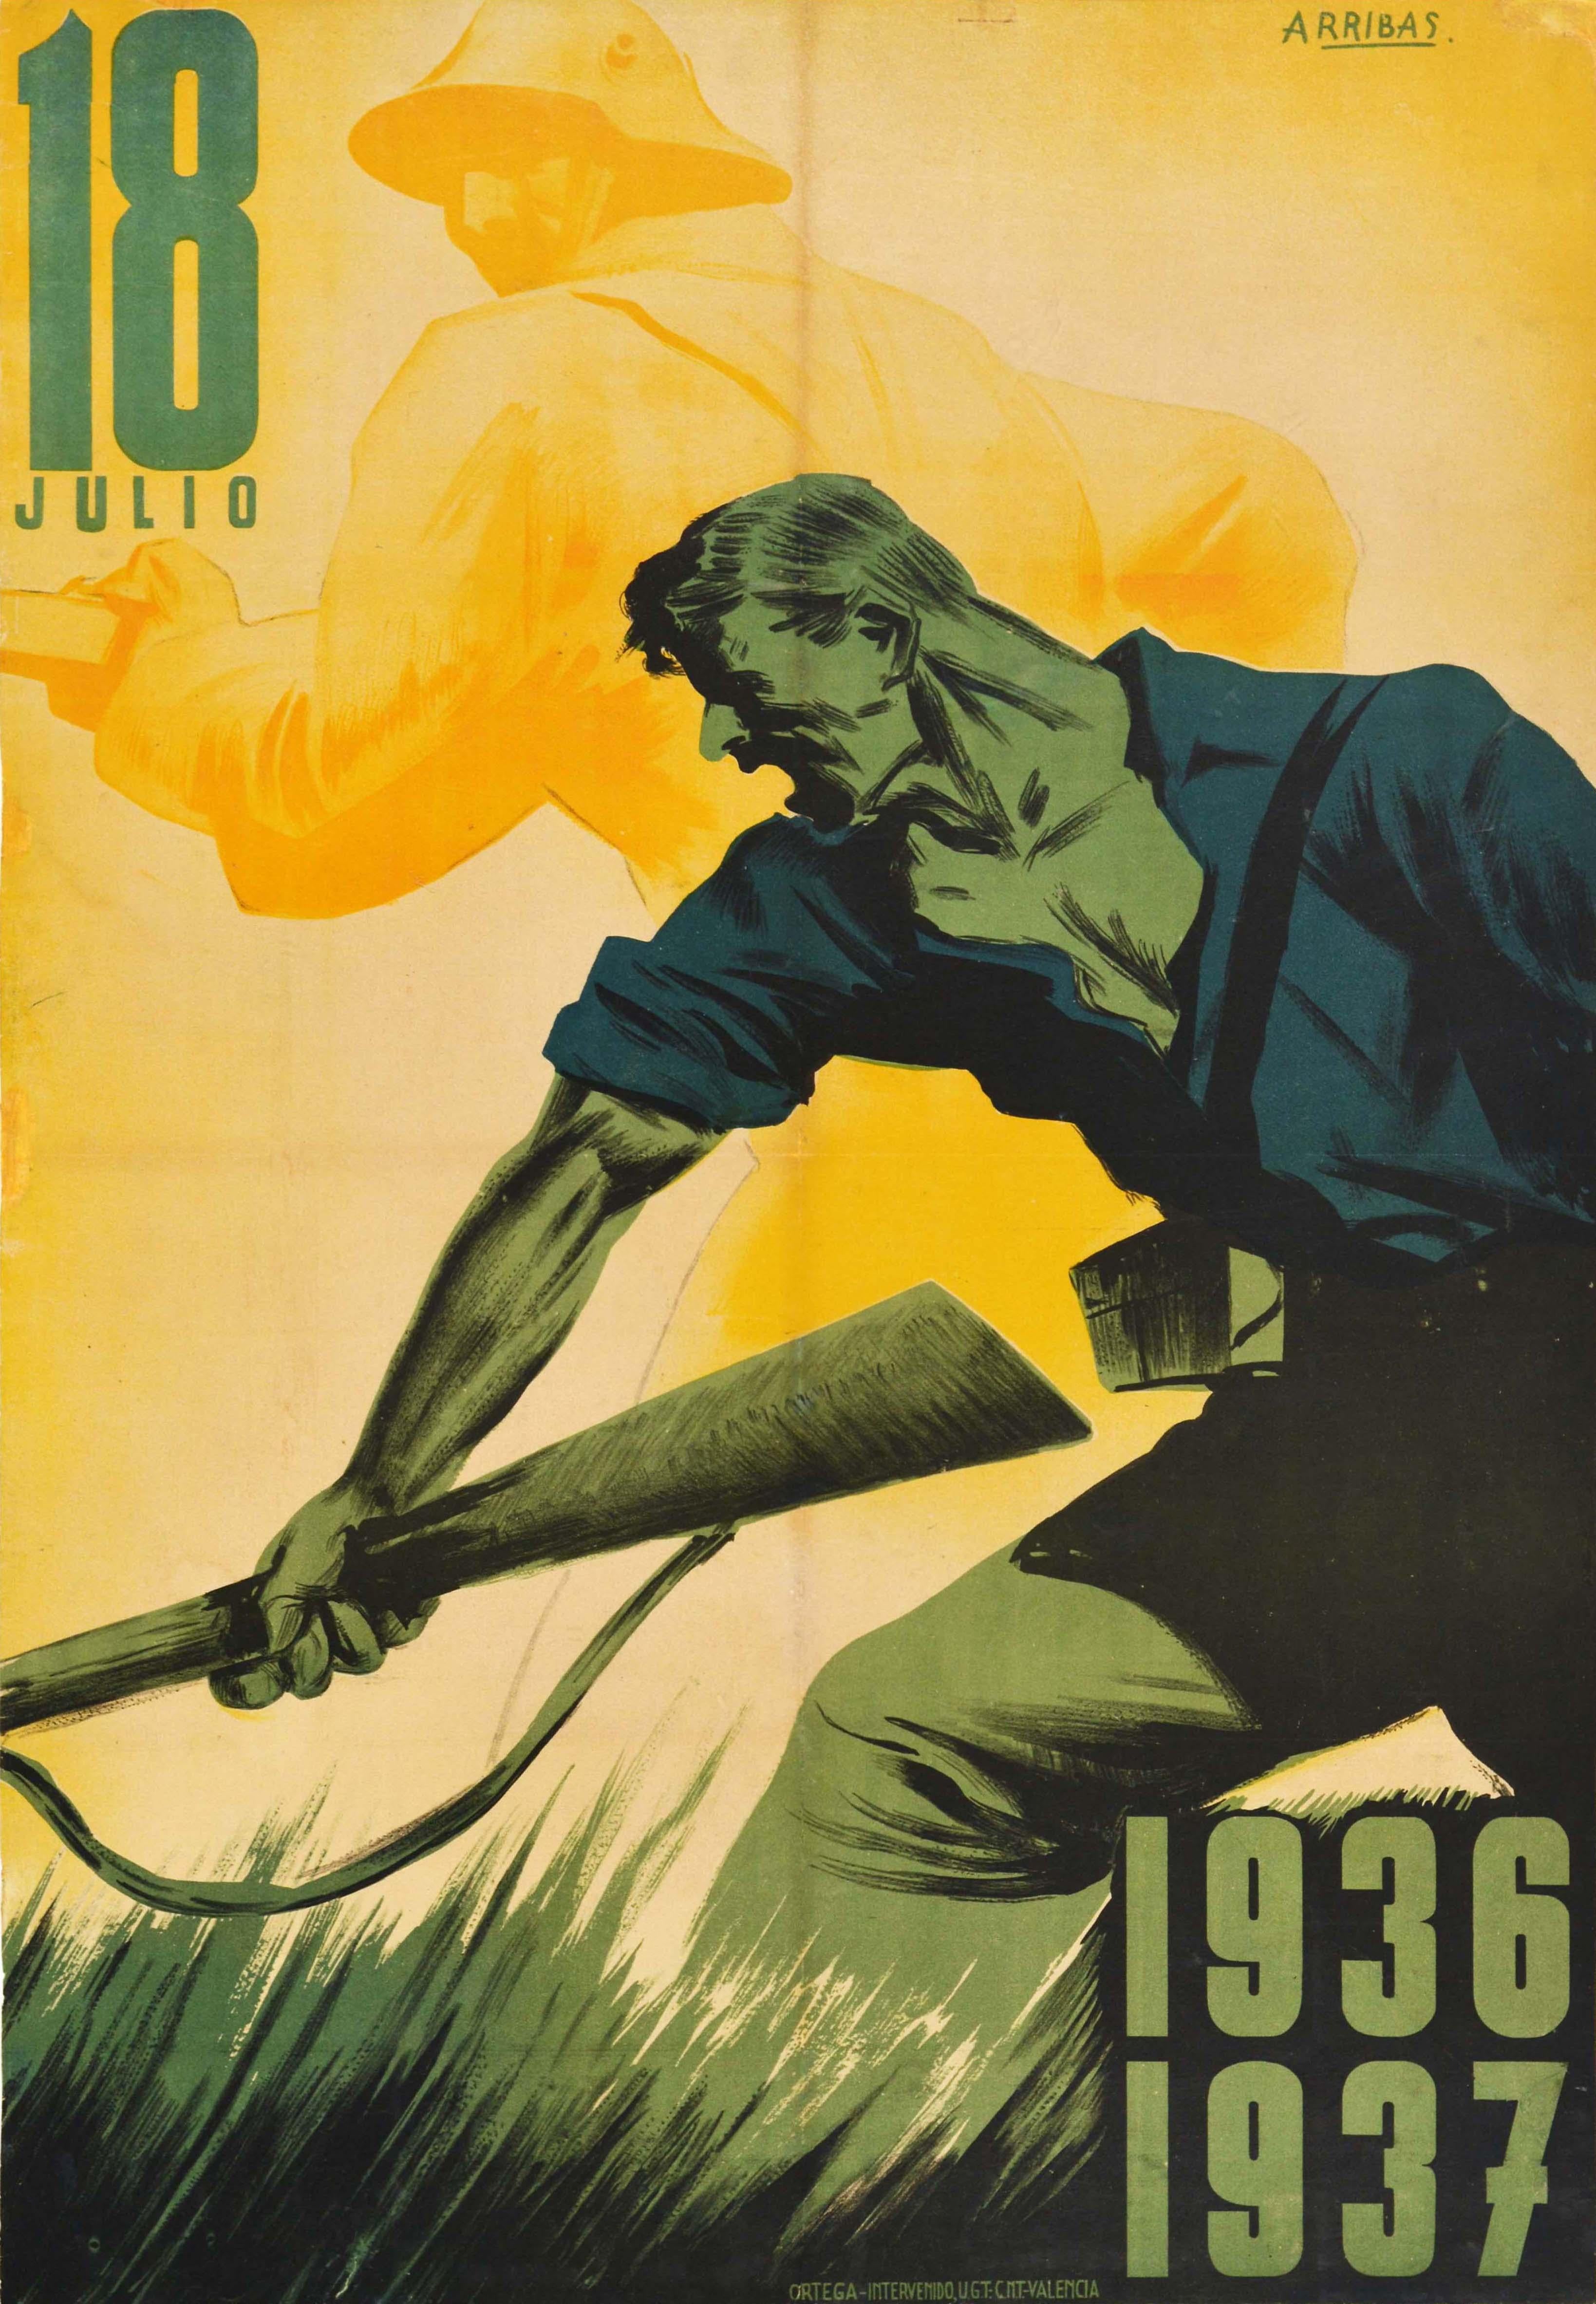 Arribas Print - Original Vintage Spanish Civil War Poster July 18 Julio 1936 1937 Anniversary